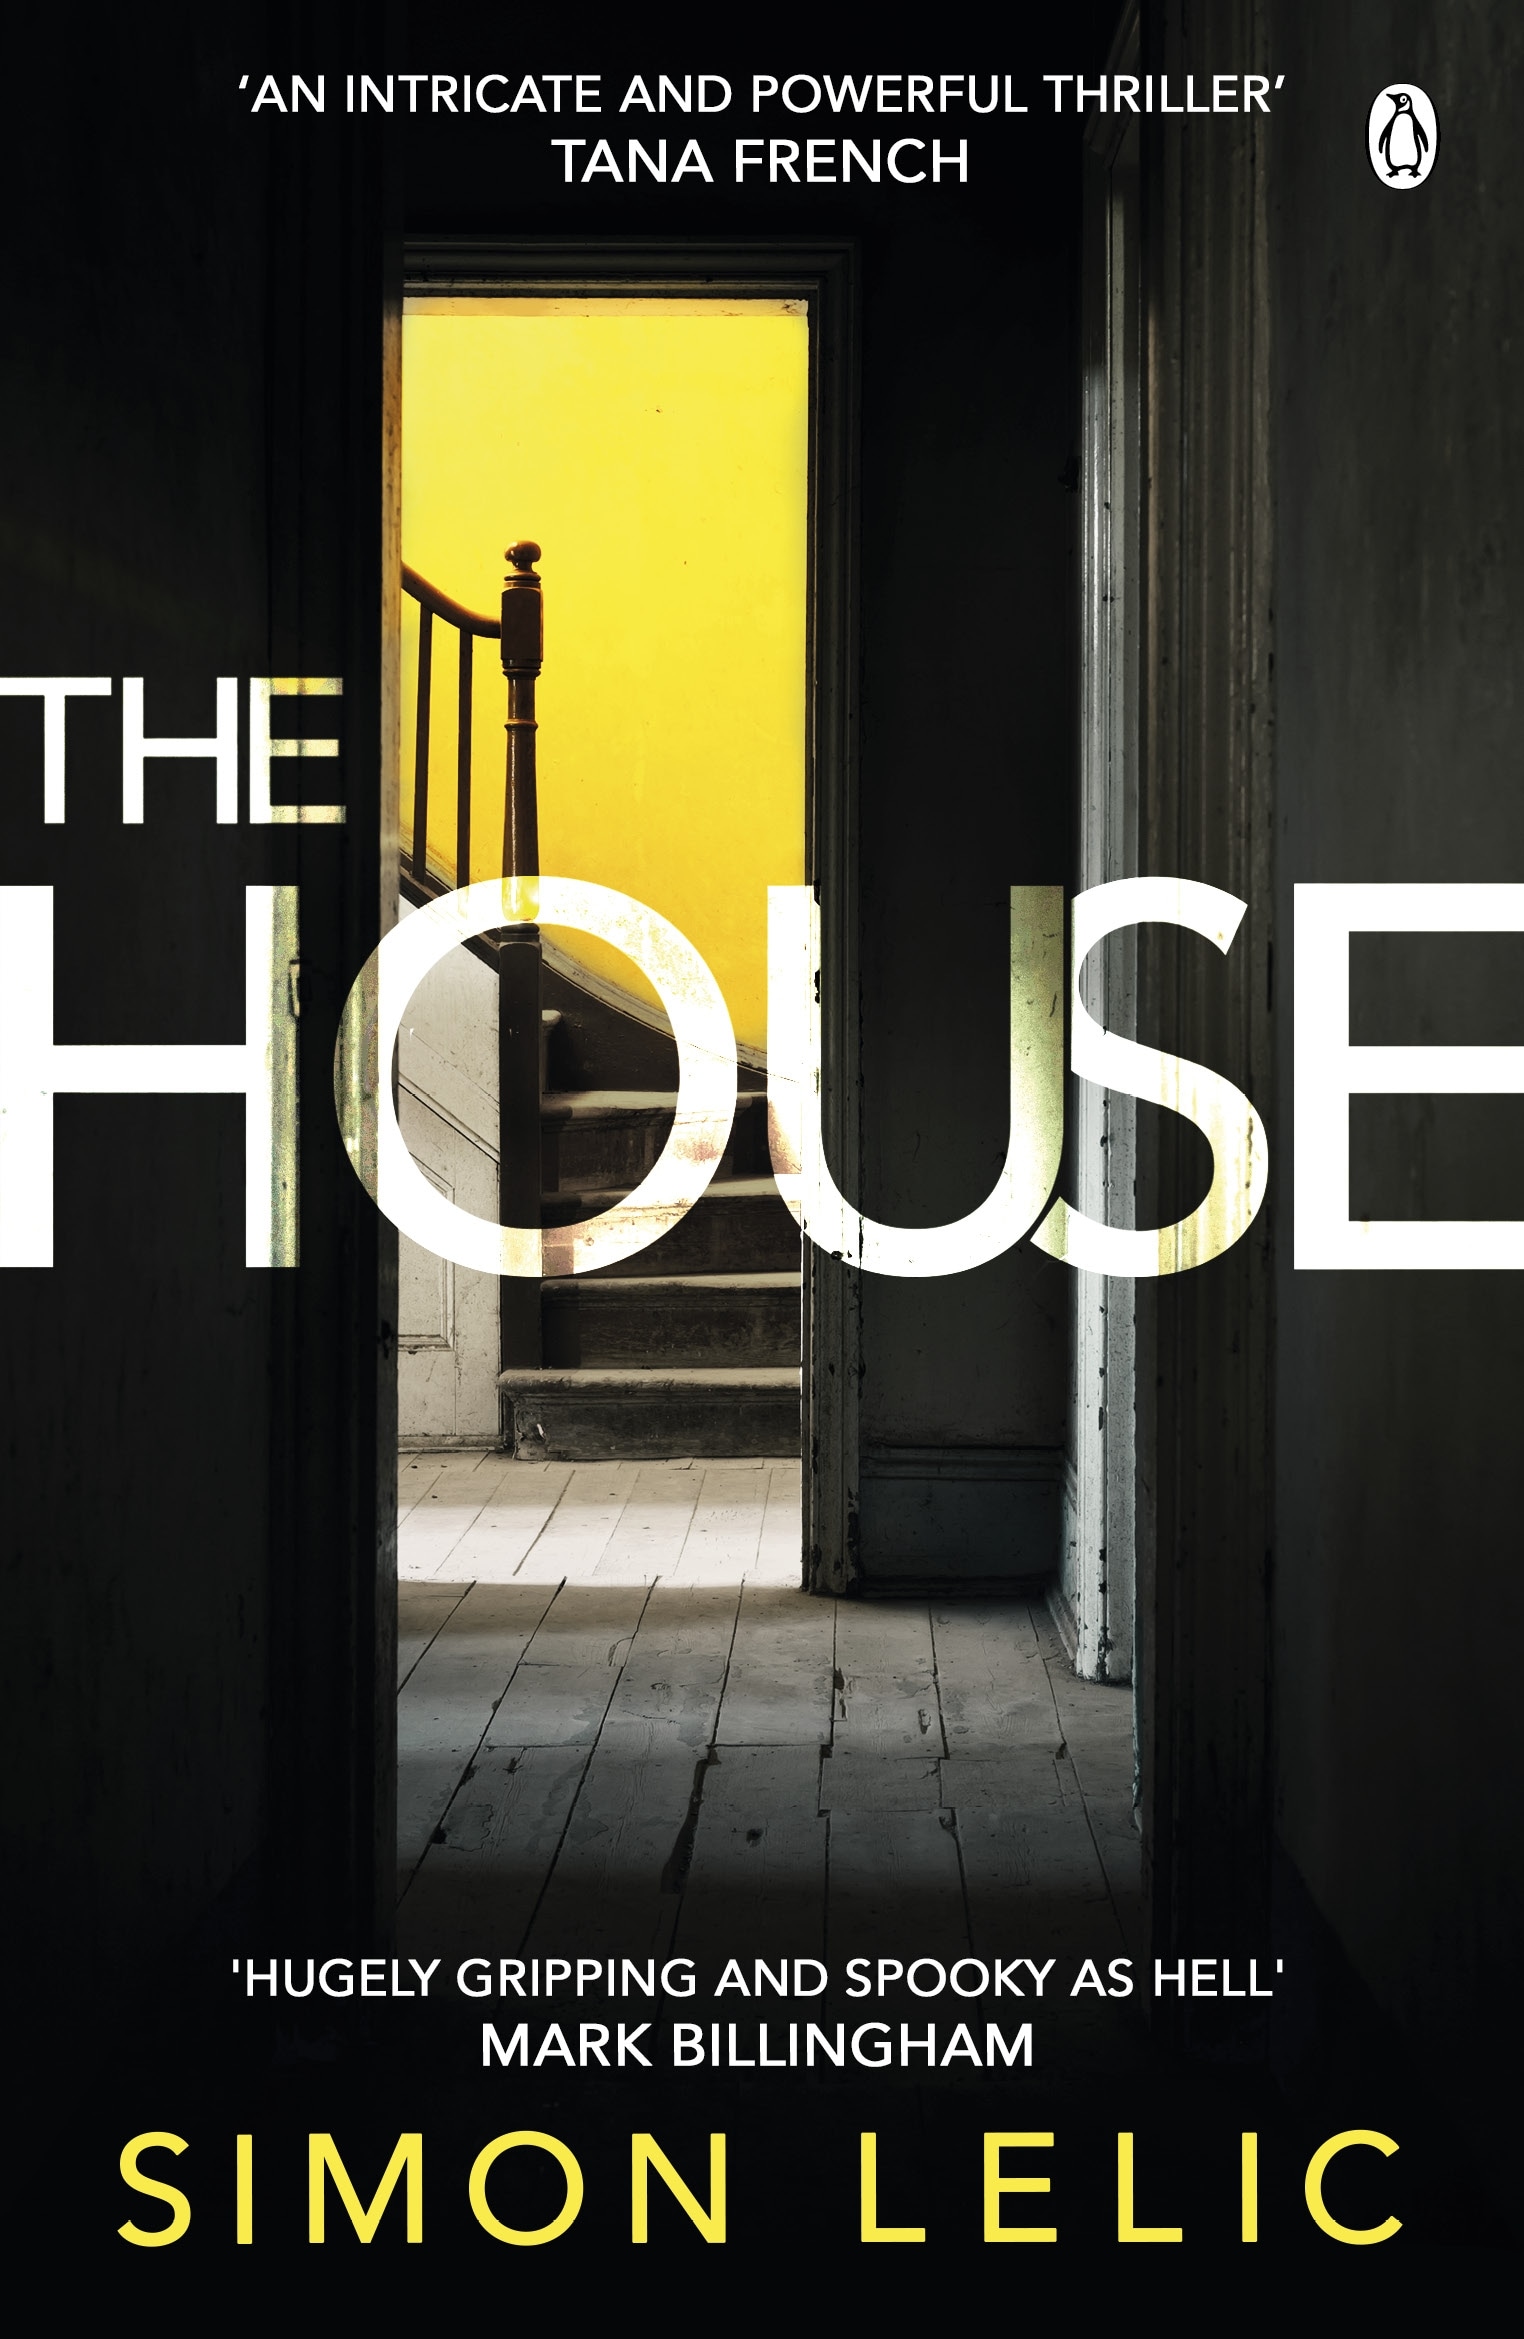 Book “The House” by Simon Lelic — November 2, 2017